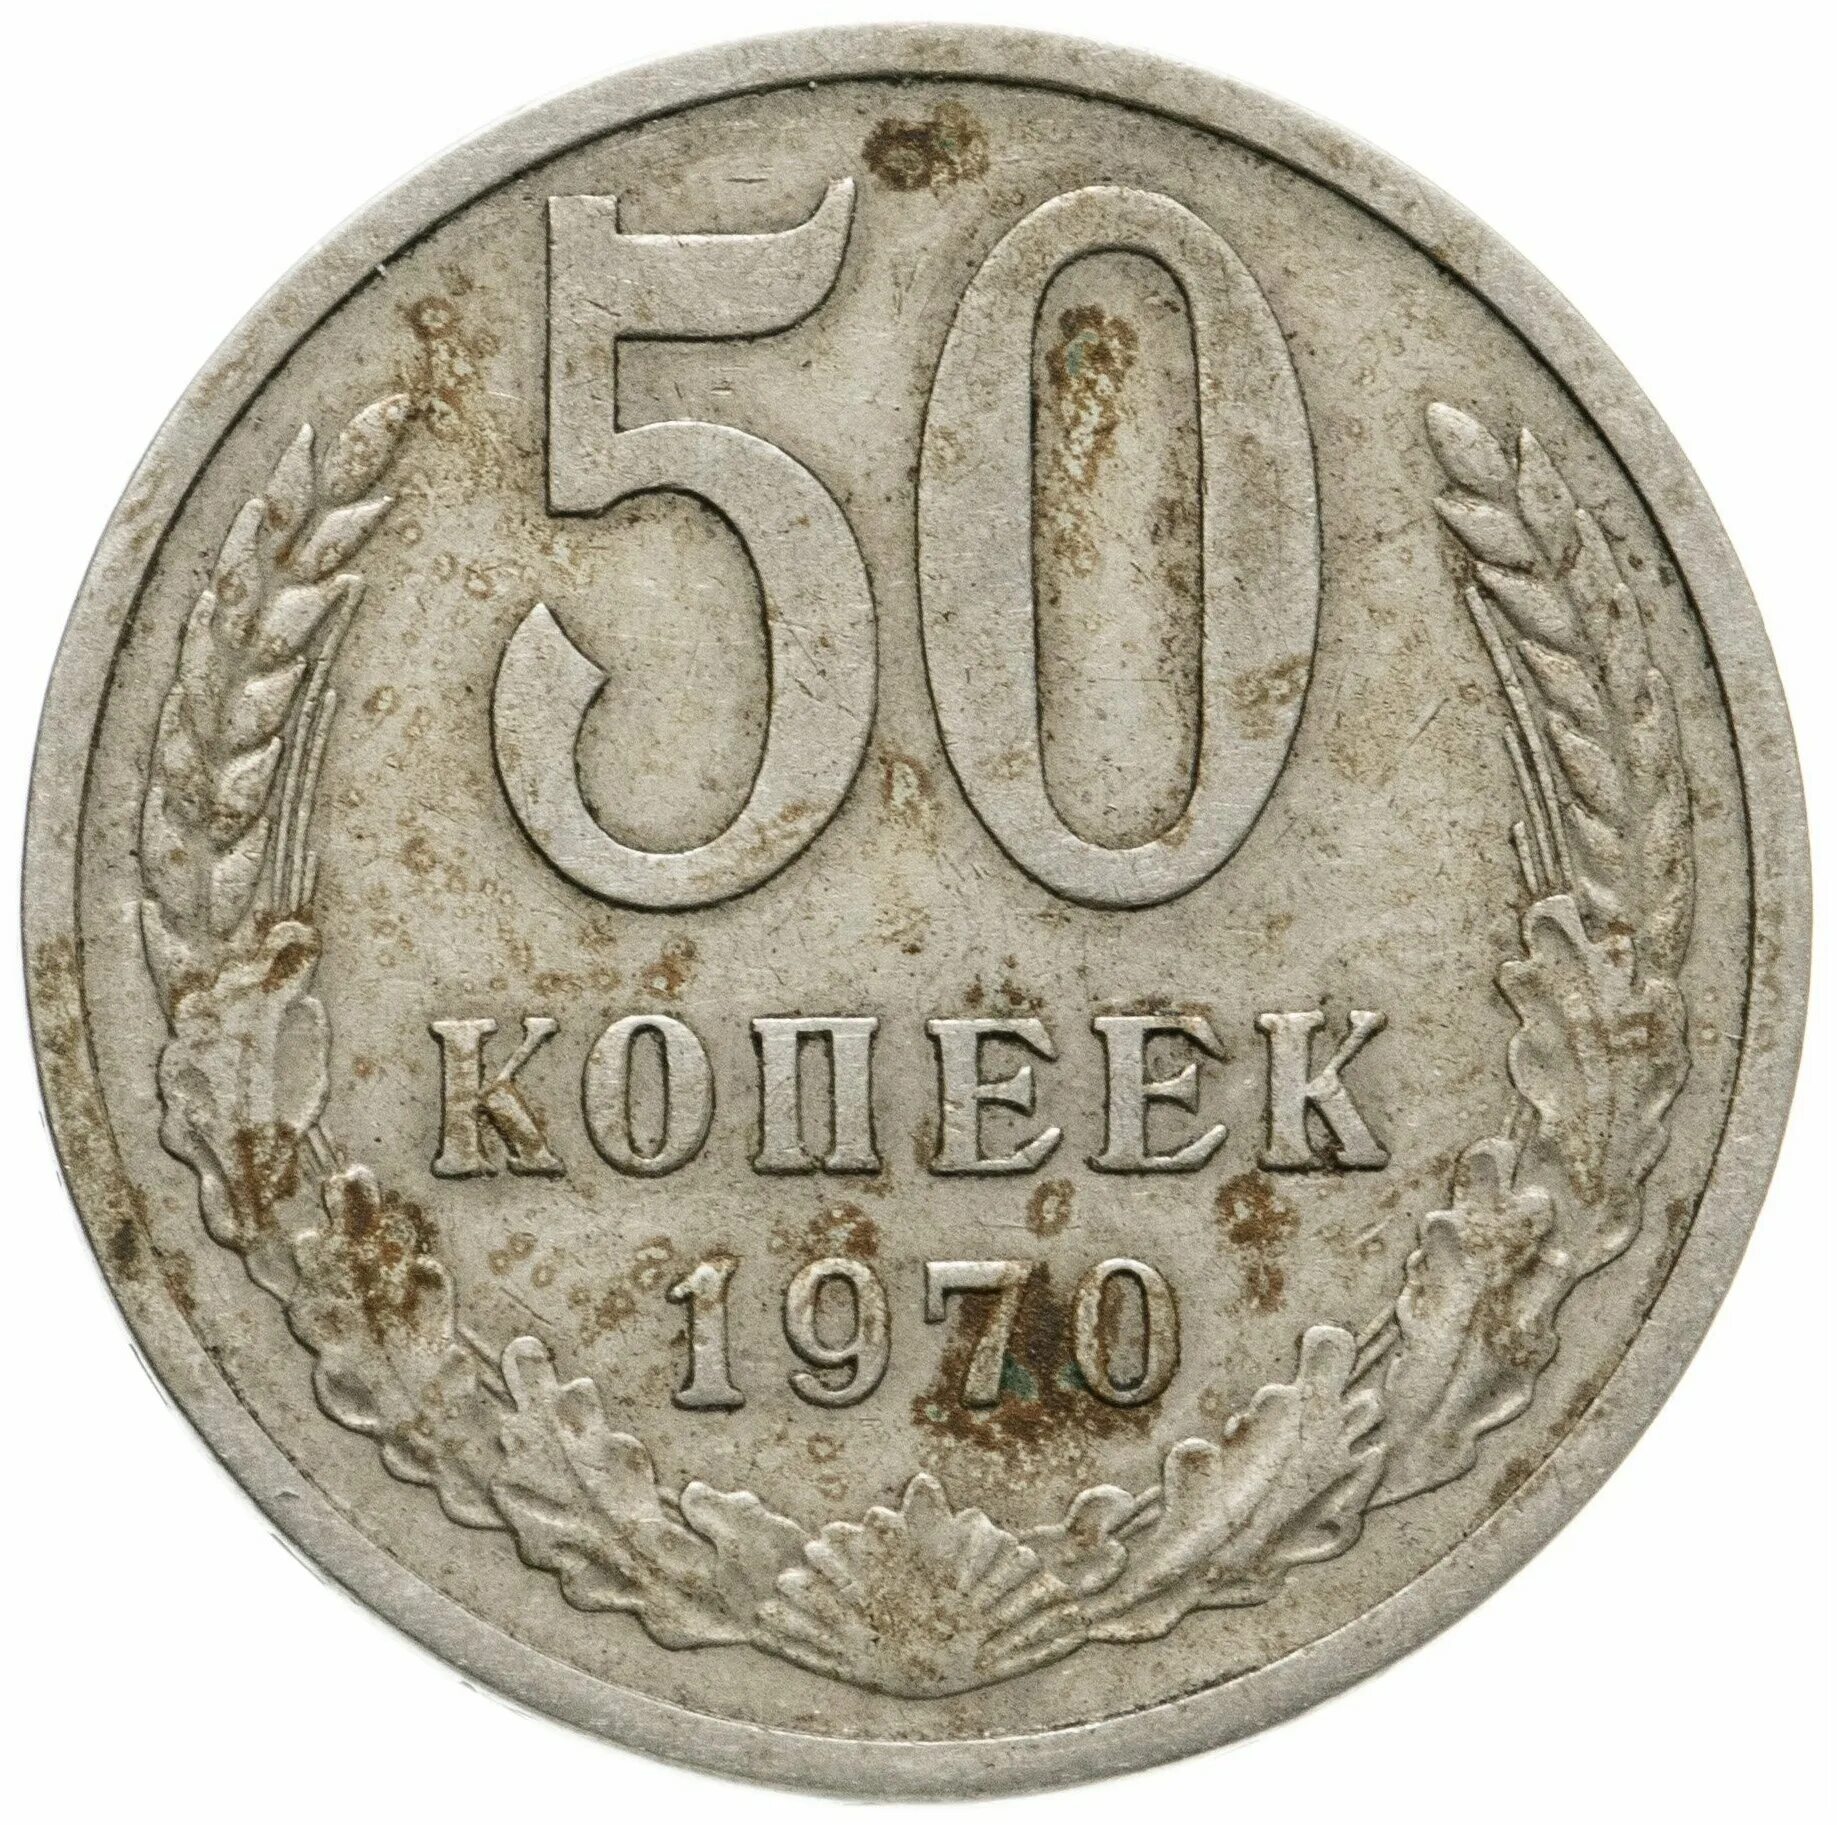 50 Копеек 1970. Монета 50 копеек. Пятьдесят копеек. Монета 50 копеек года серебро